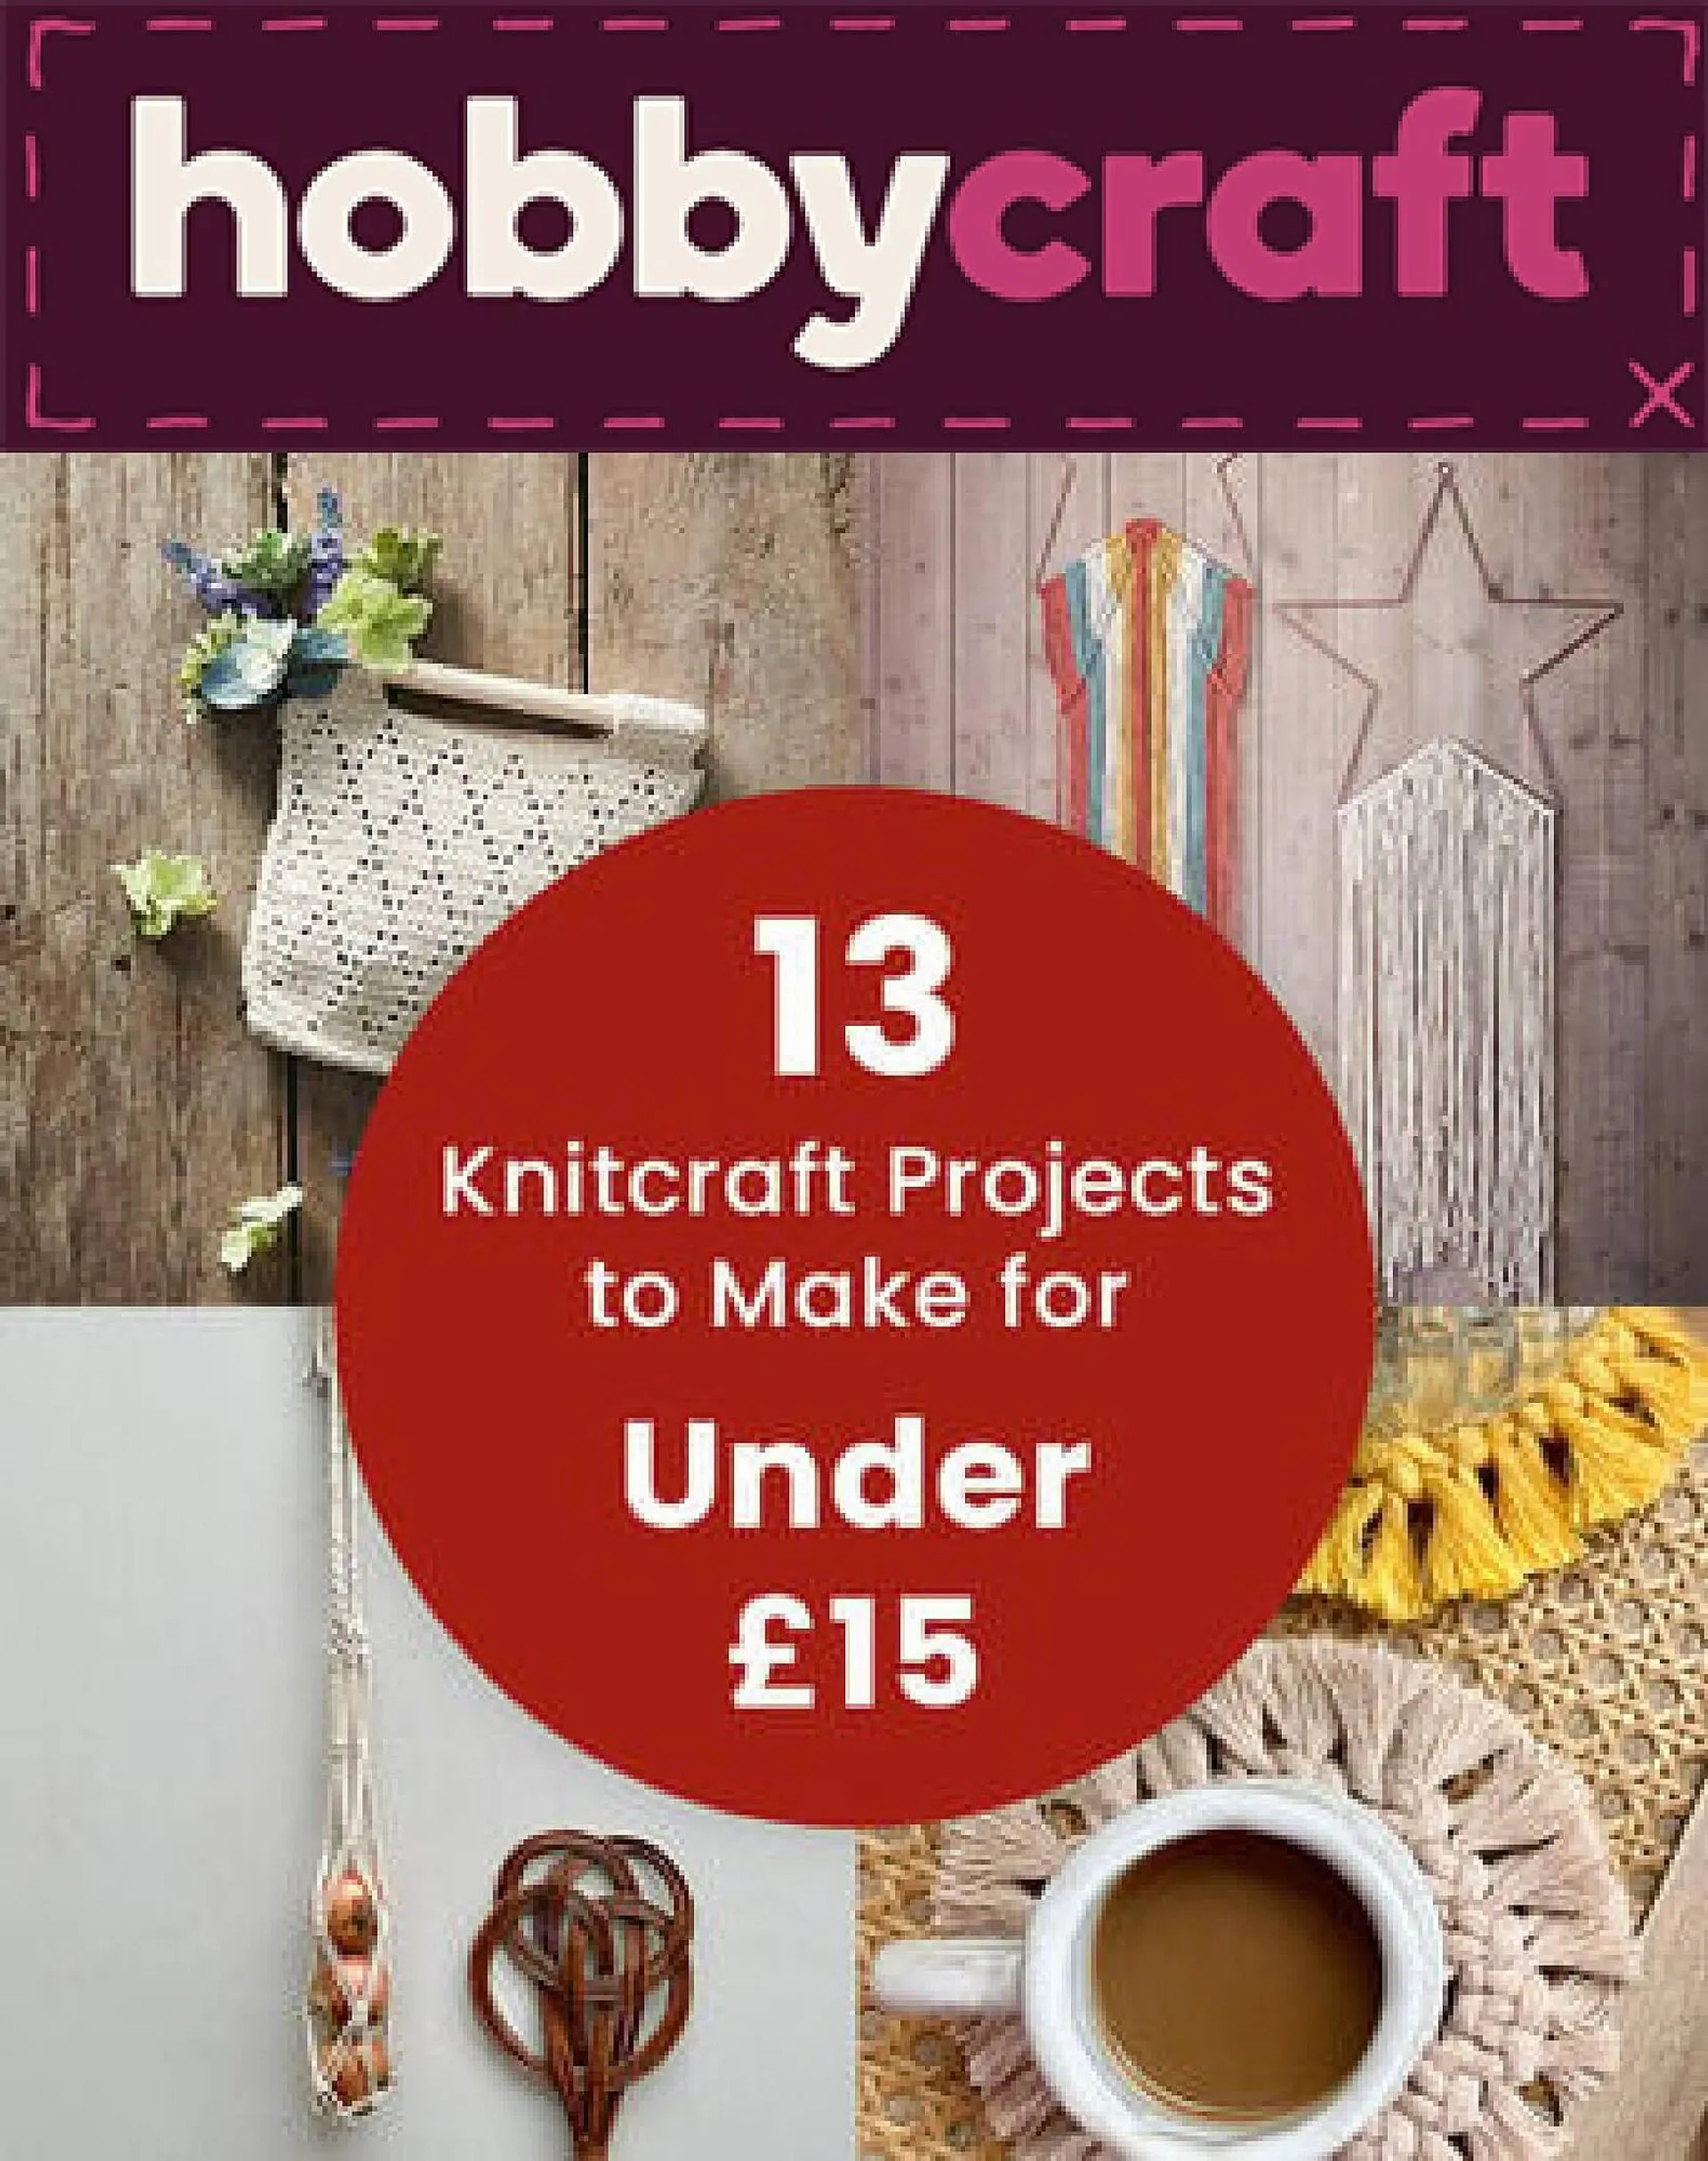 Hobbycraft leaflet - 3